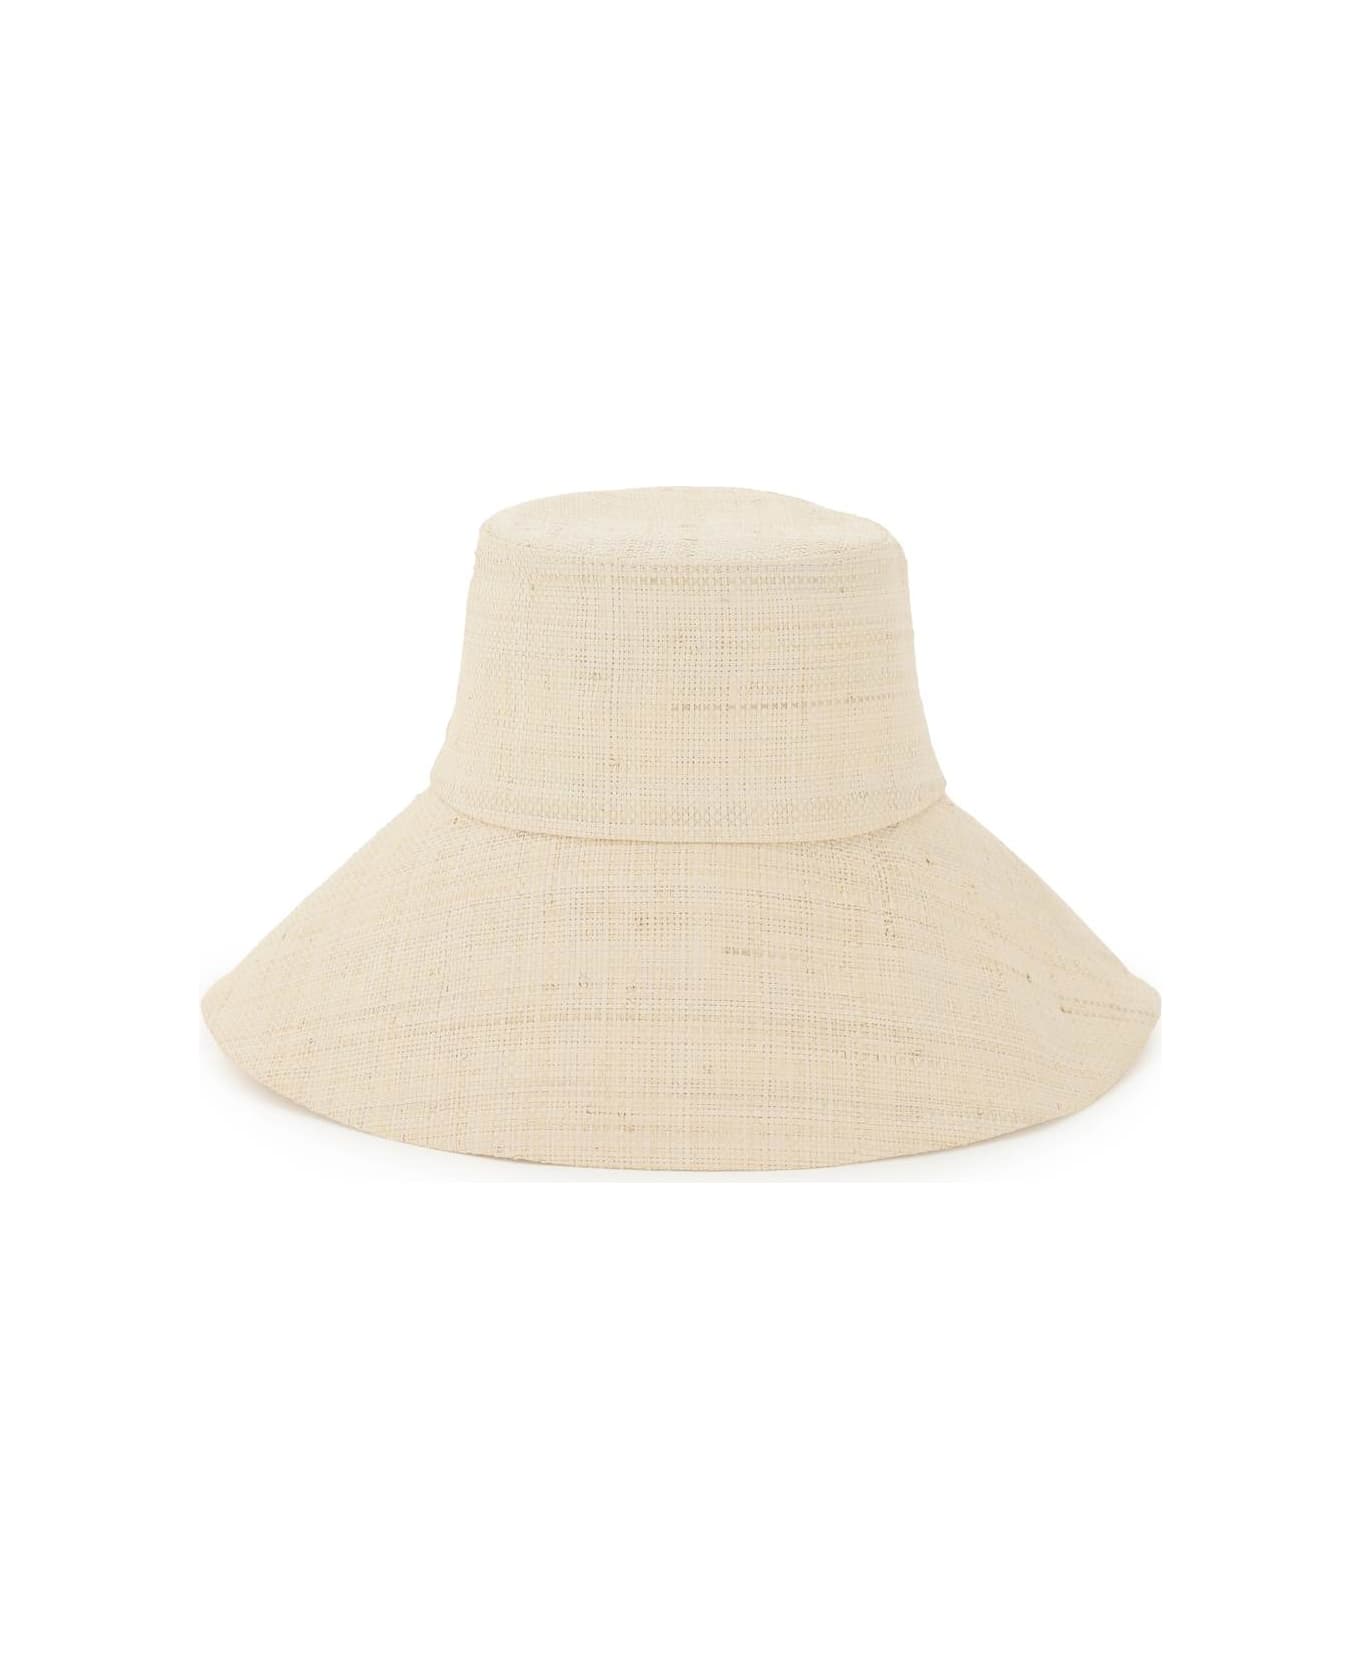 Ruslan Baginskiy Straw Wide Brim Bucket Hat - NATURAL STRAW (Beige) 帽子